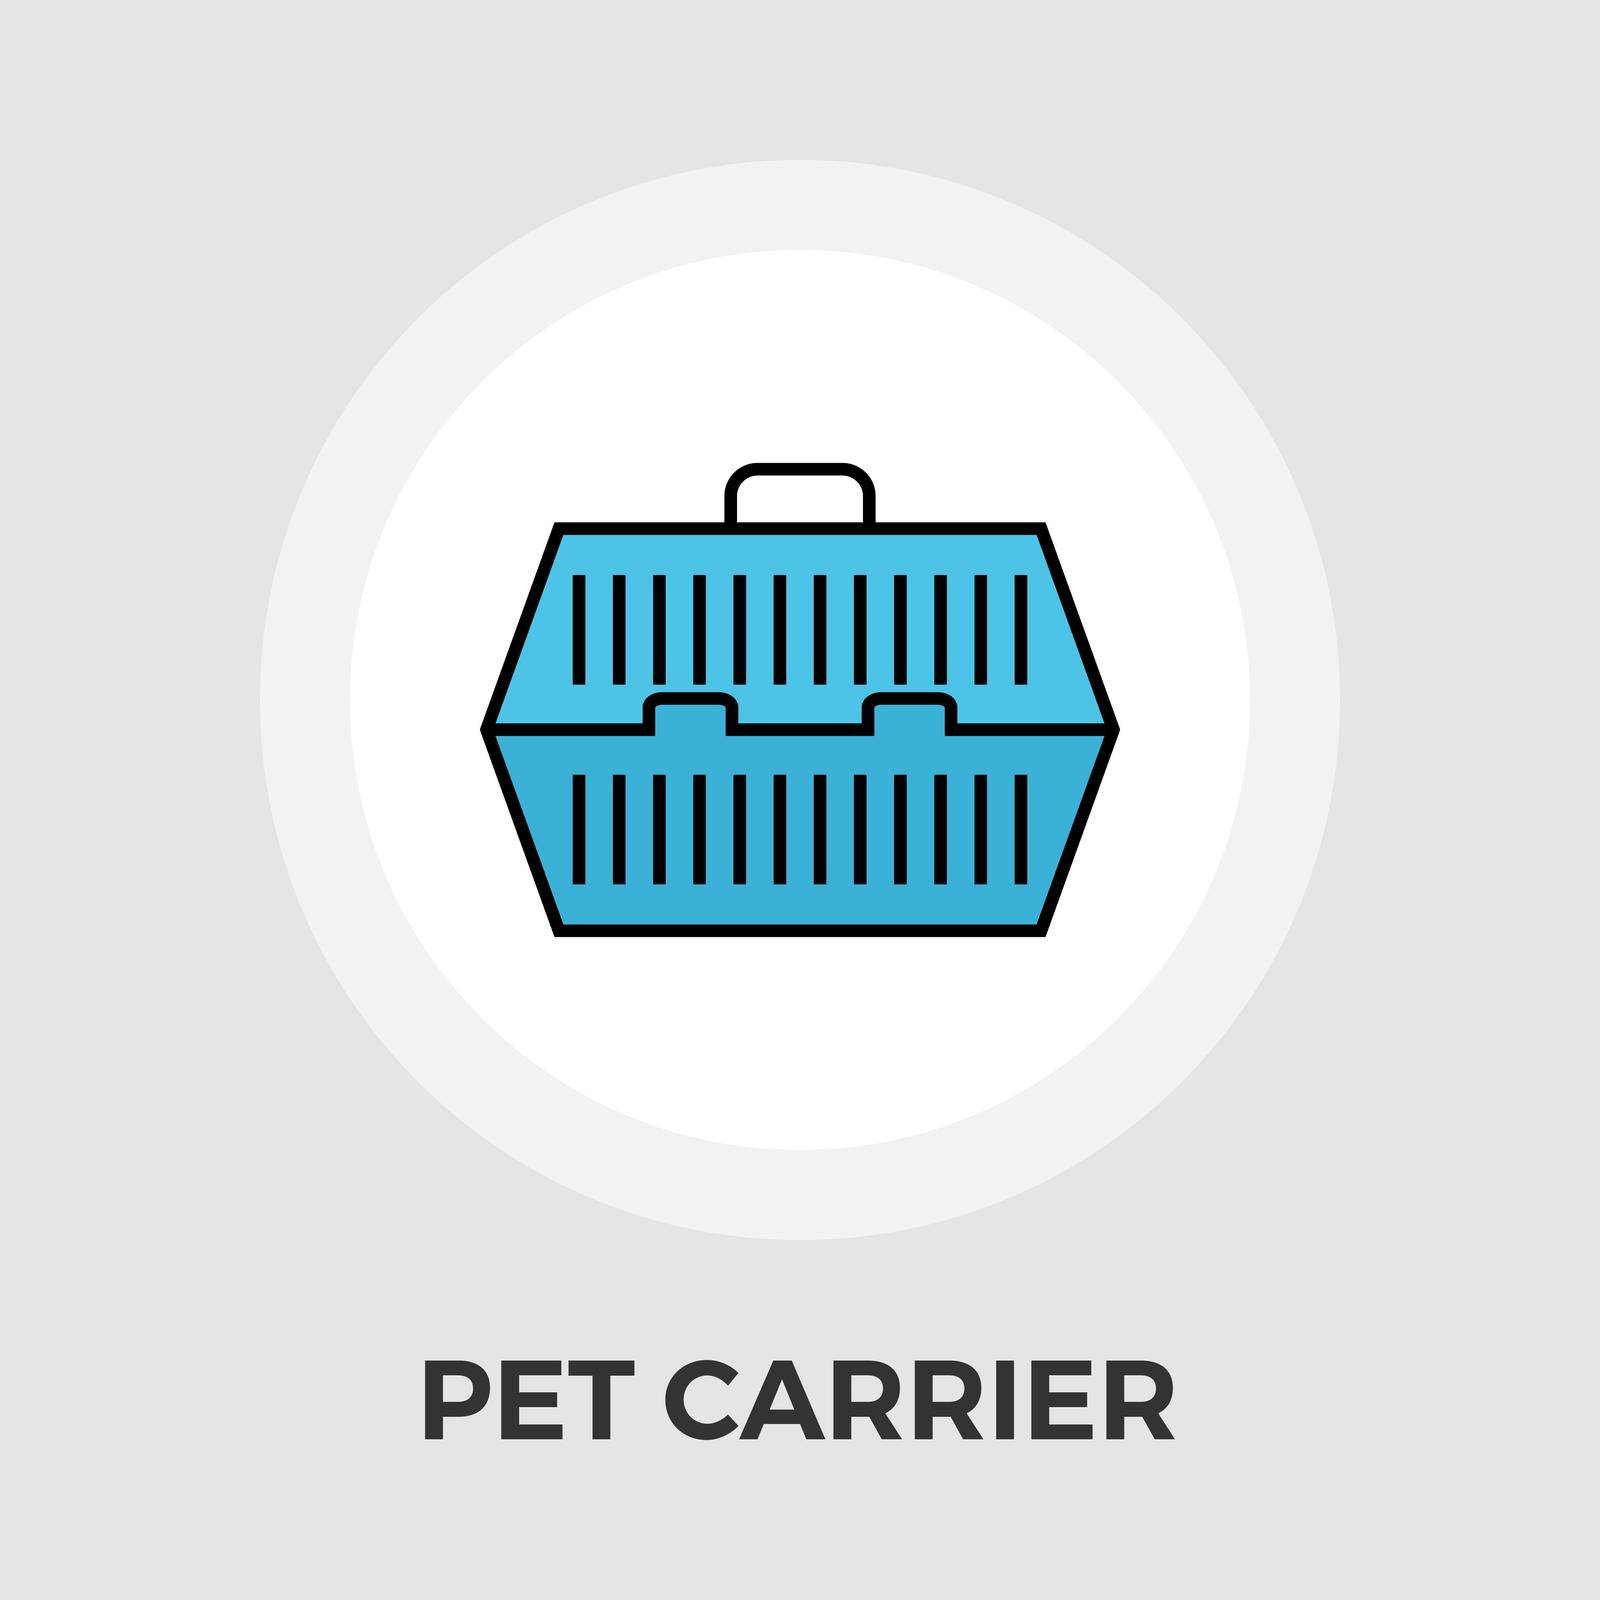 Pet Carrier Flat Icon by smoki